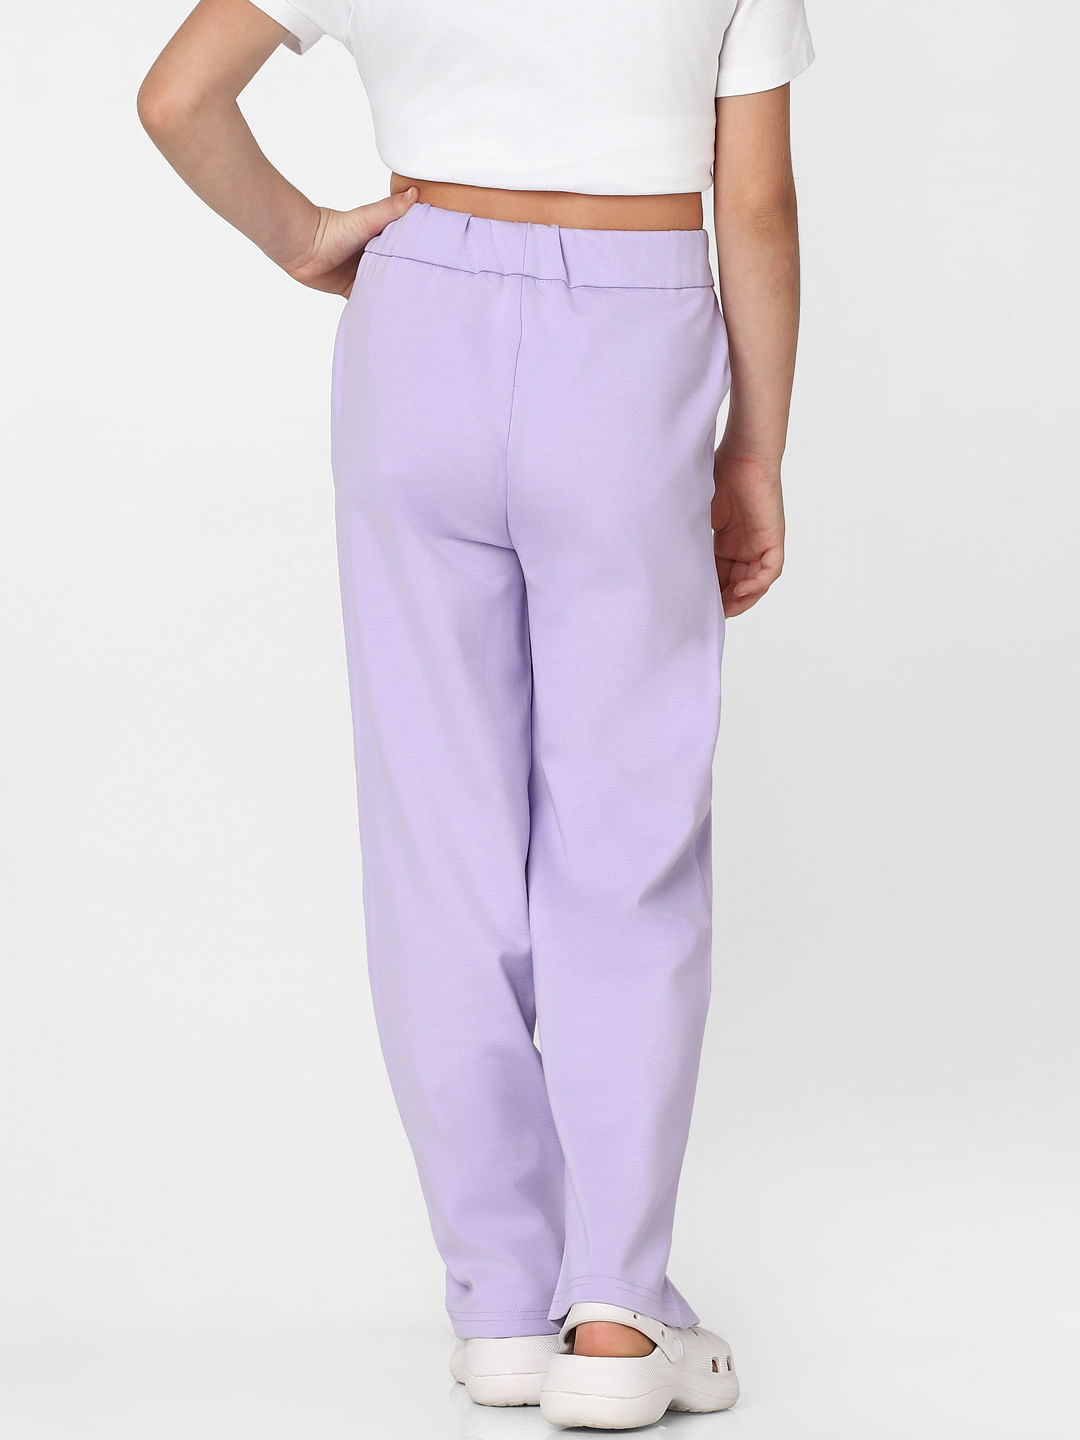 Buy AND girl Kids Purple Self Pants for Girls Clothing Online  Tata CLiQ